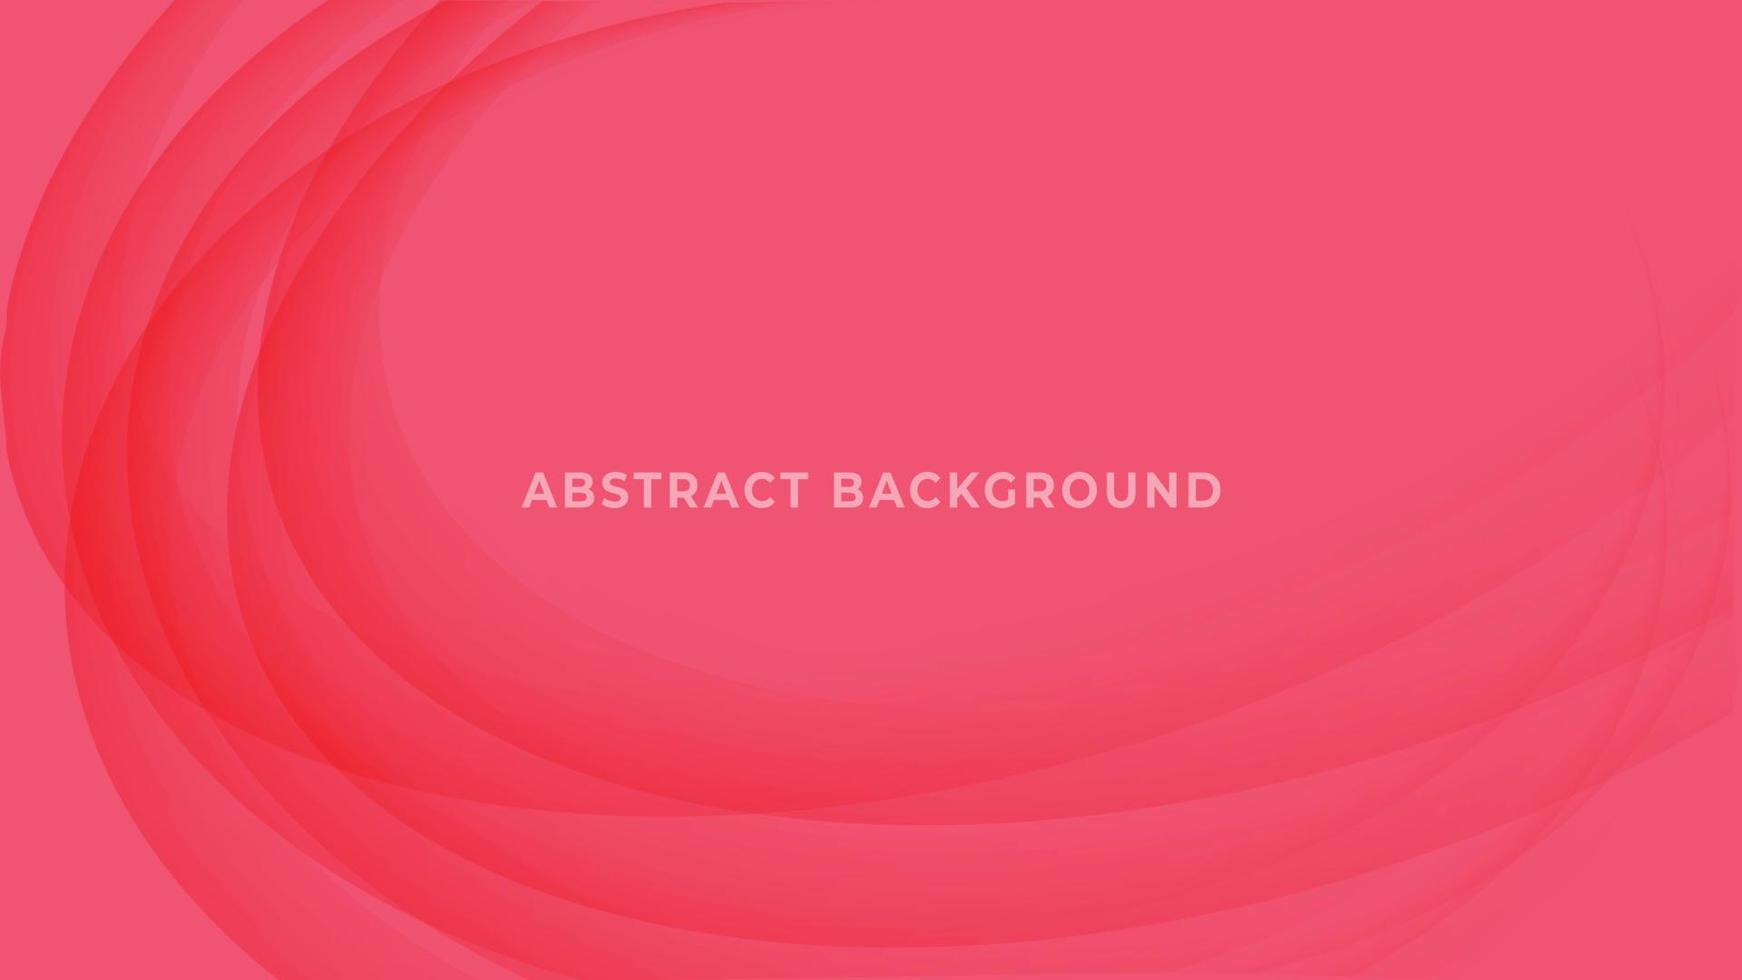 webstract glad roze Golf maas helling achtergrond ontwerp, zacht roze pastel achtergrond sjabloon vector